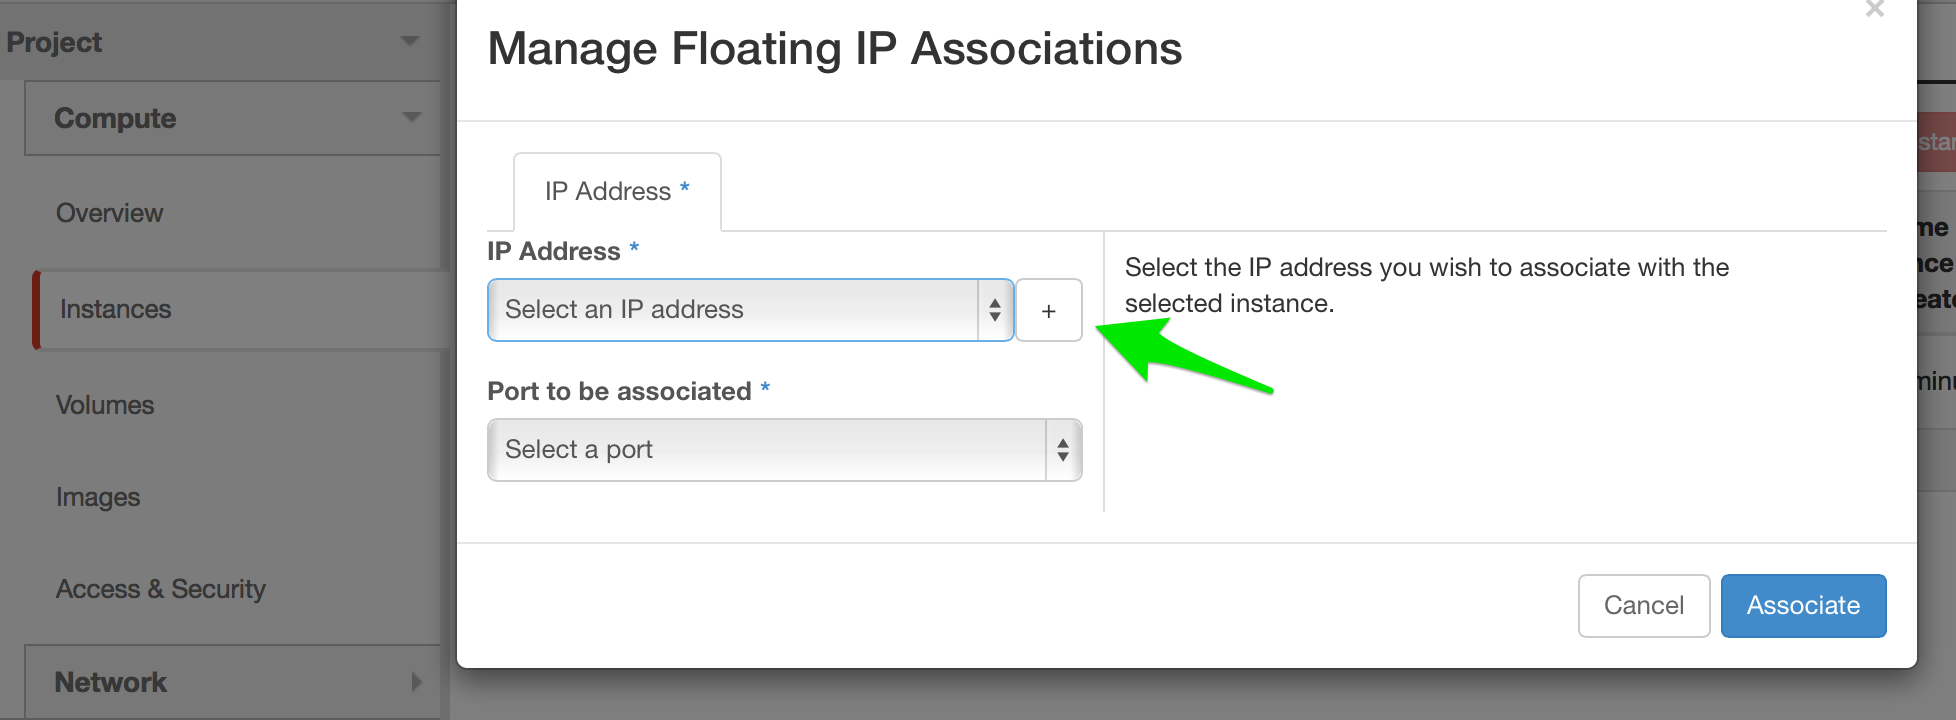 Floating IP Dialog Box